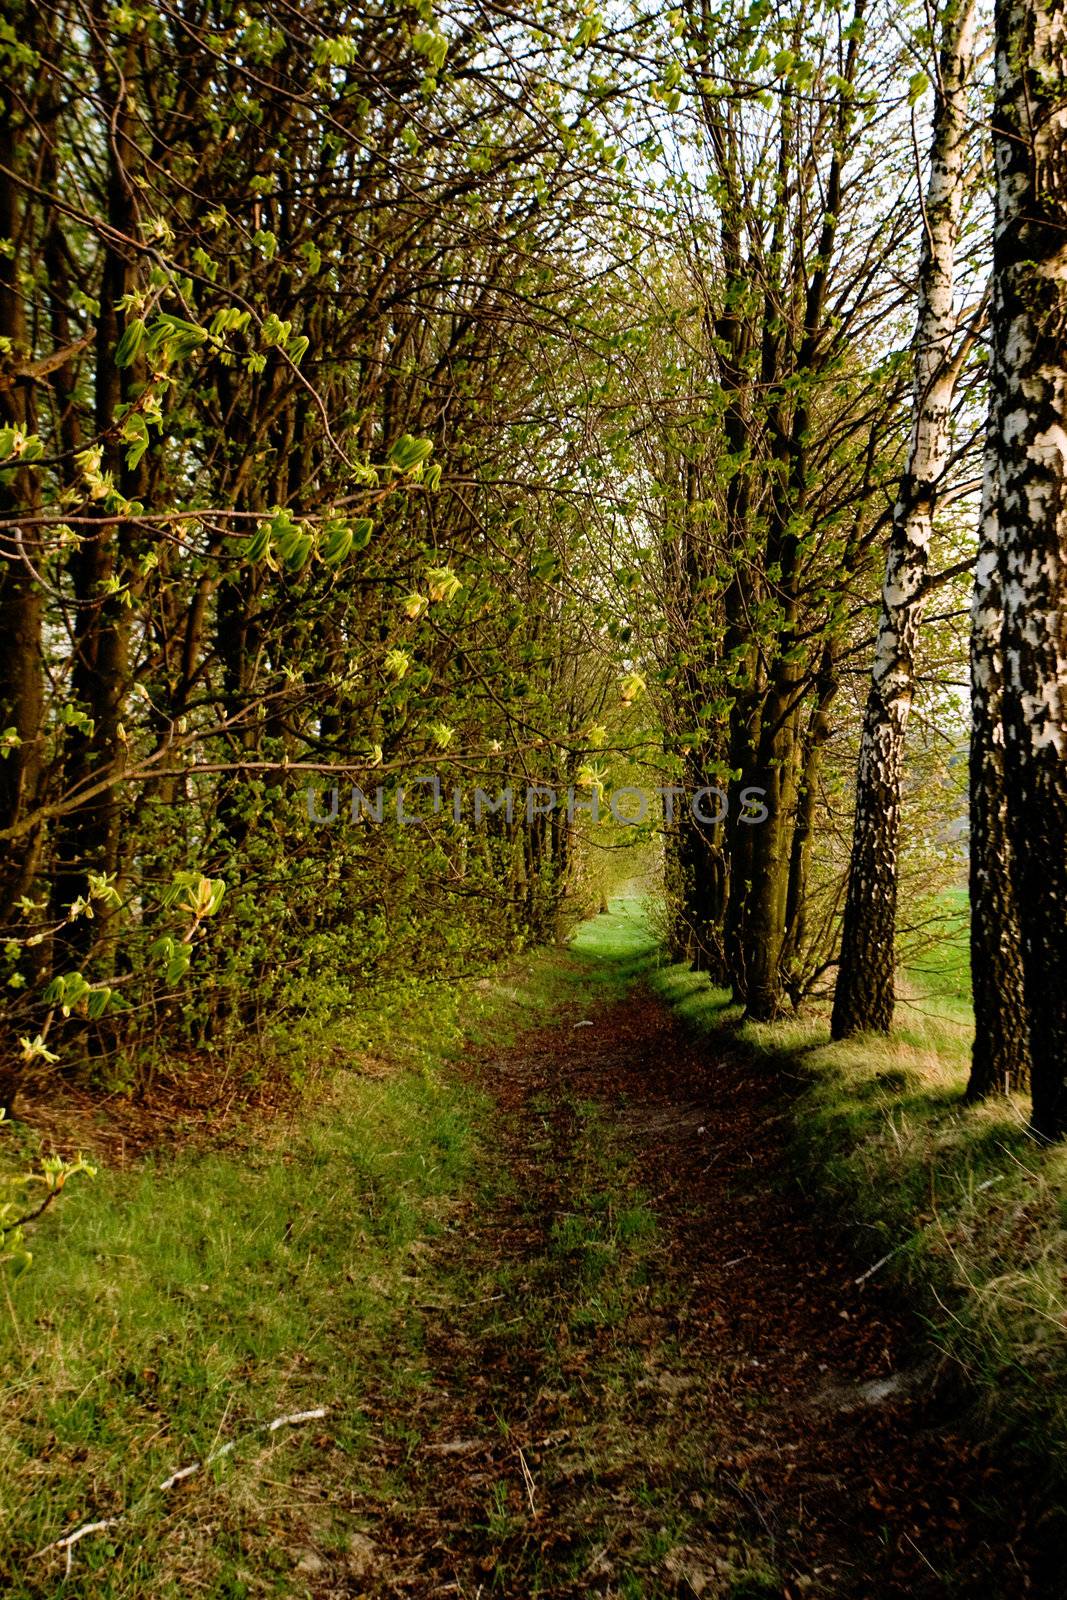 Narrow woodland road amongst  the green trees

